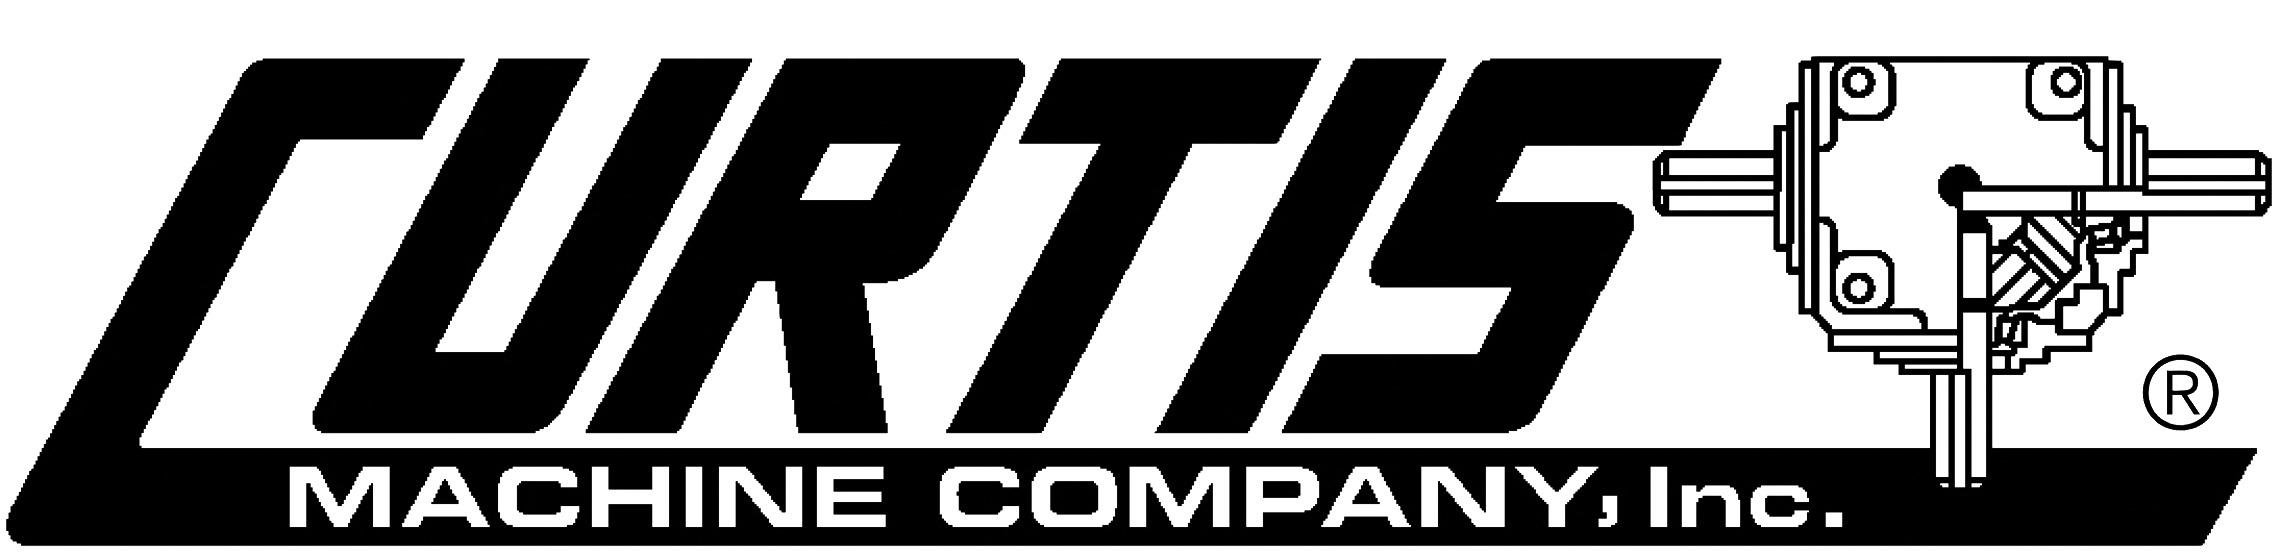 Curtis Machine Logo